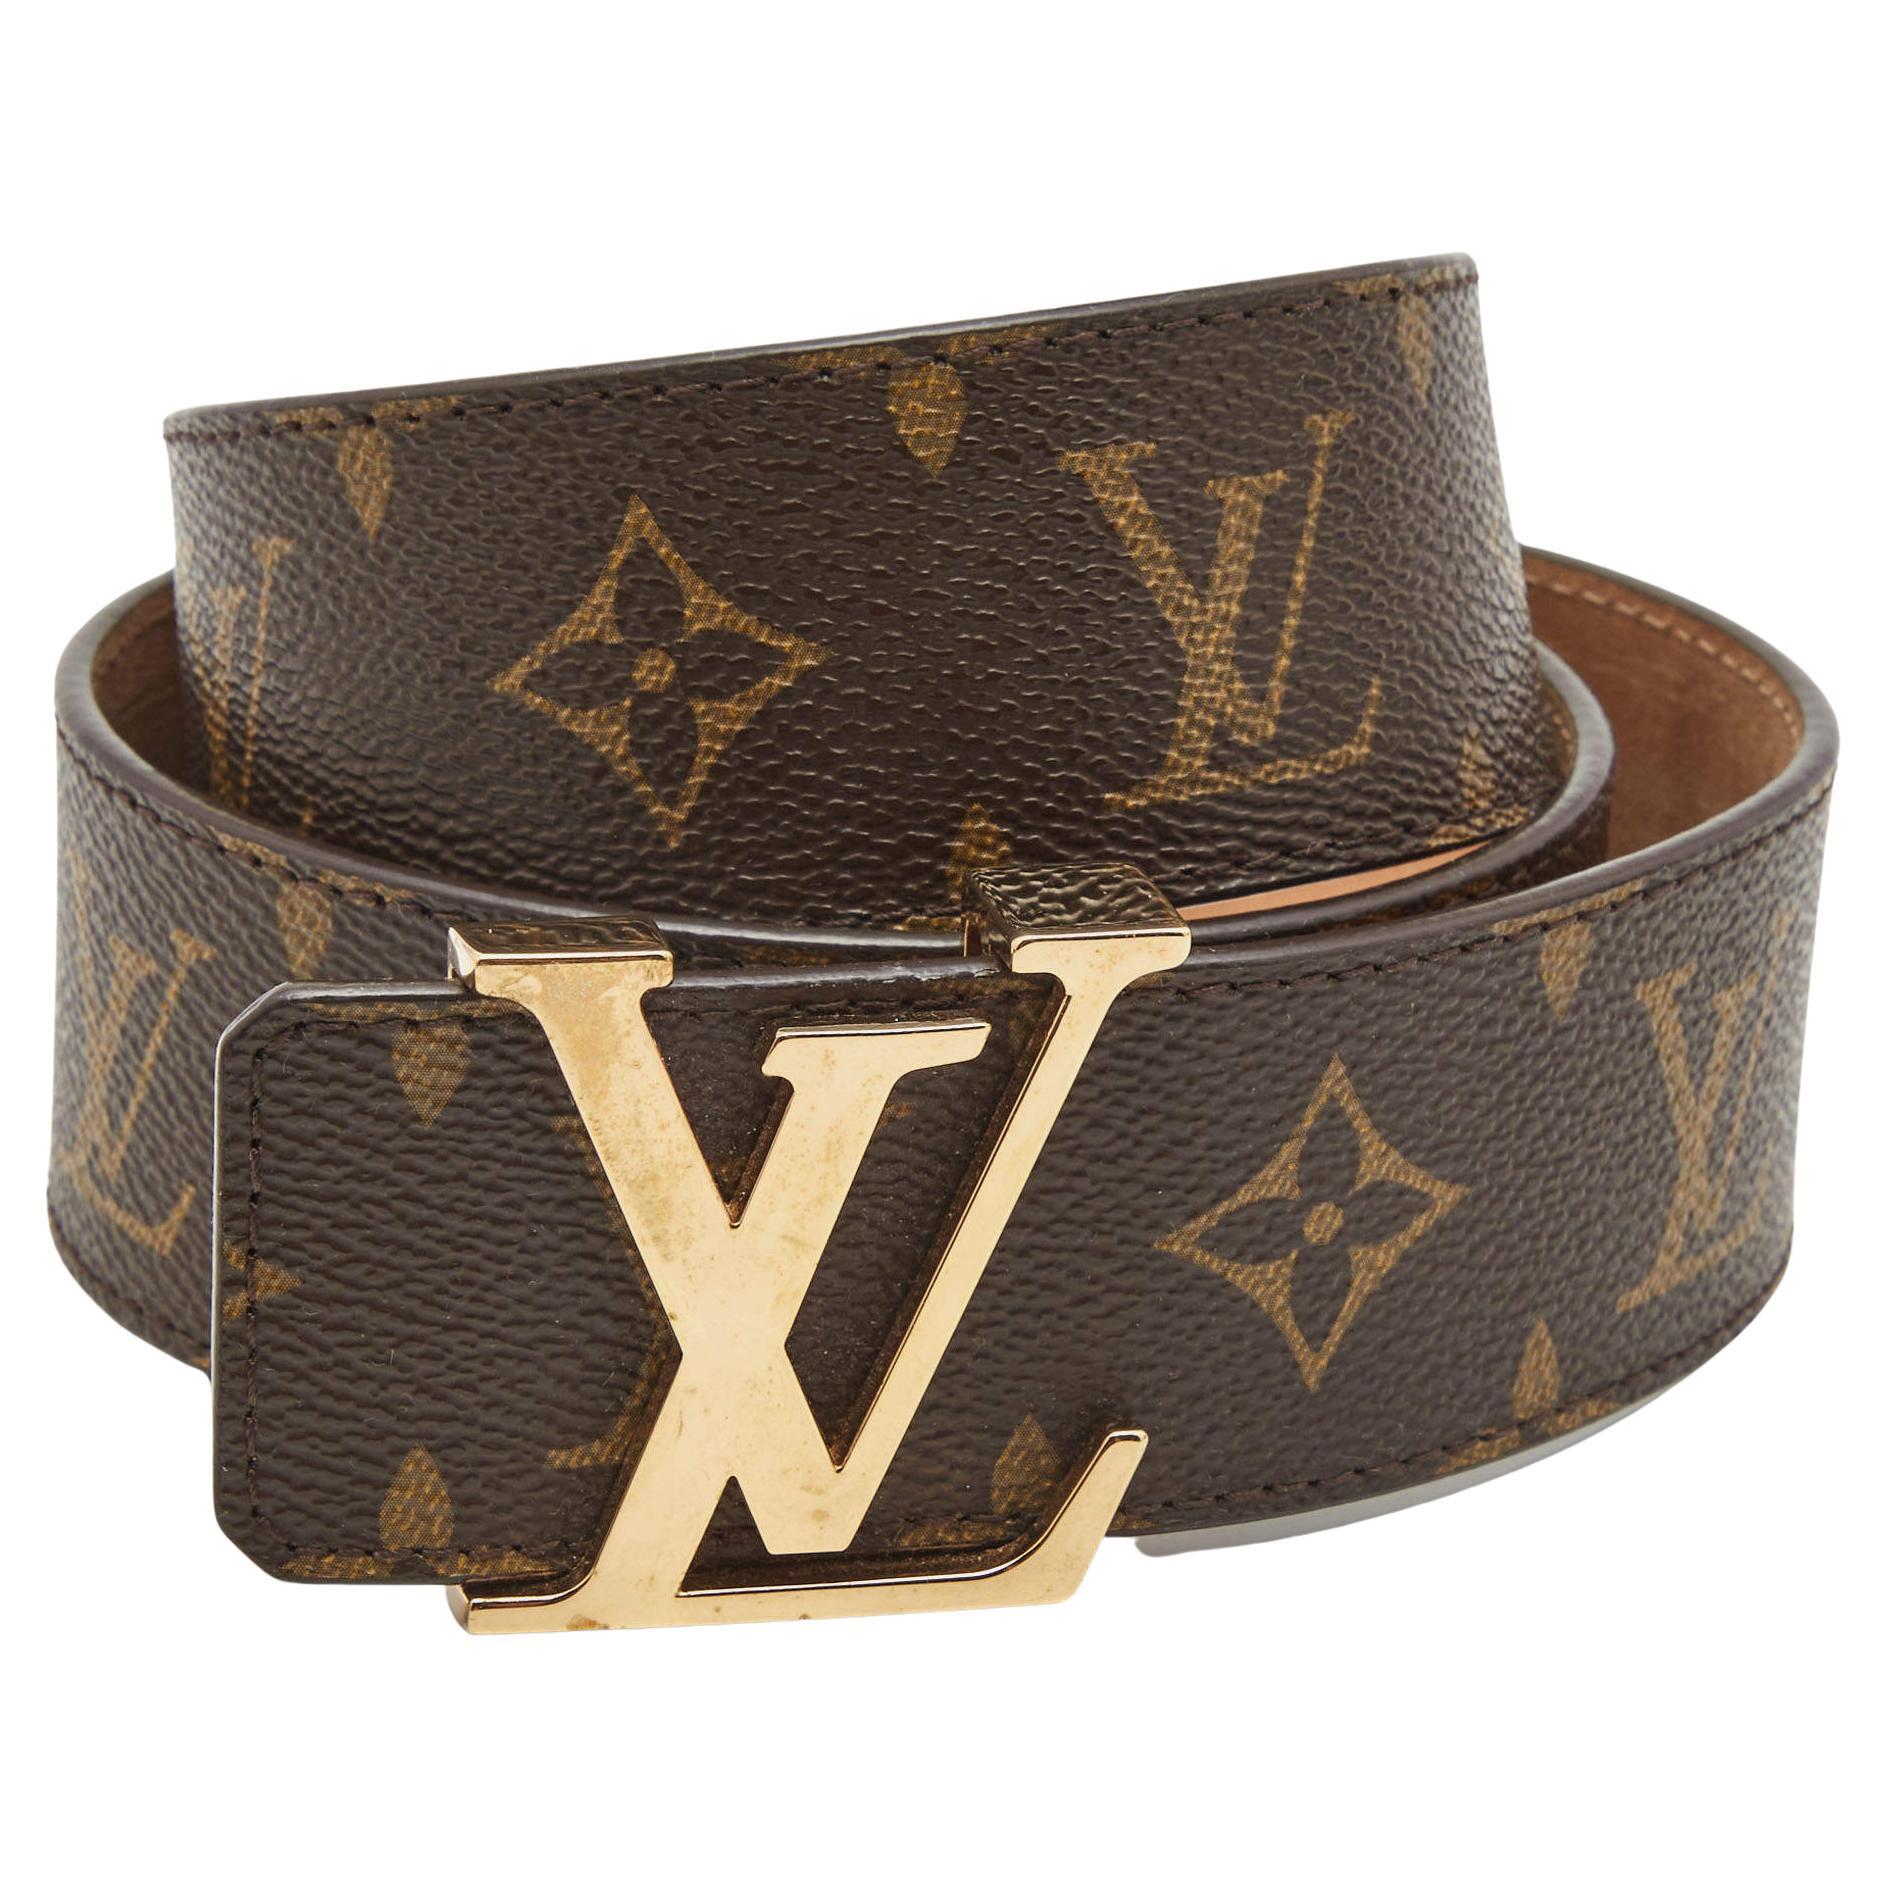 Louis Vuitton Monogram Belt - 68 For Sale on 1stDibs